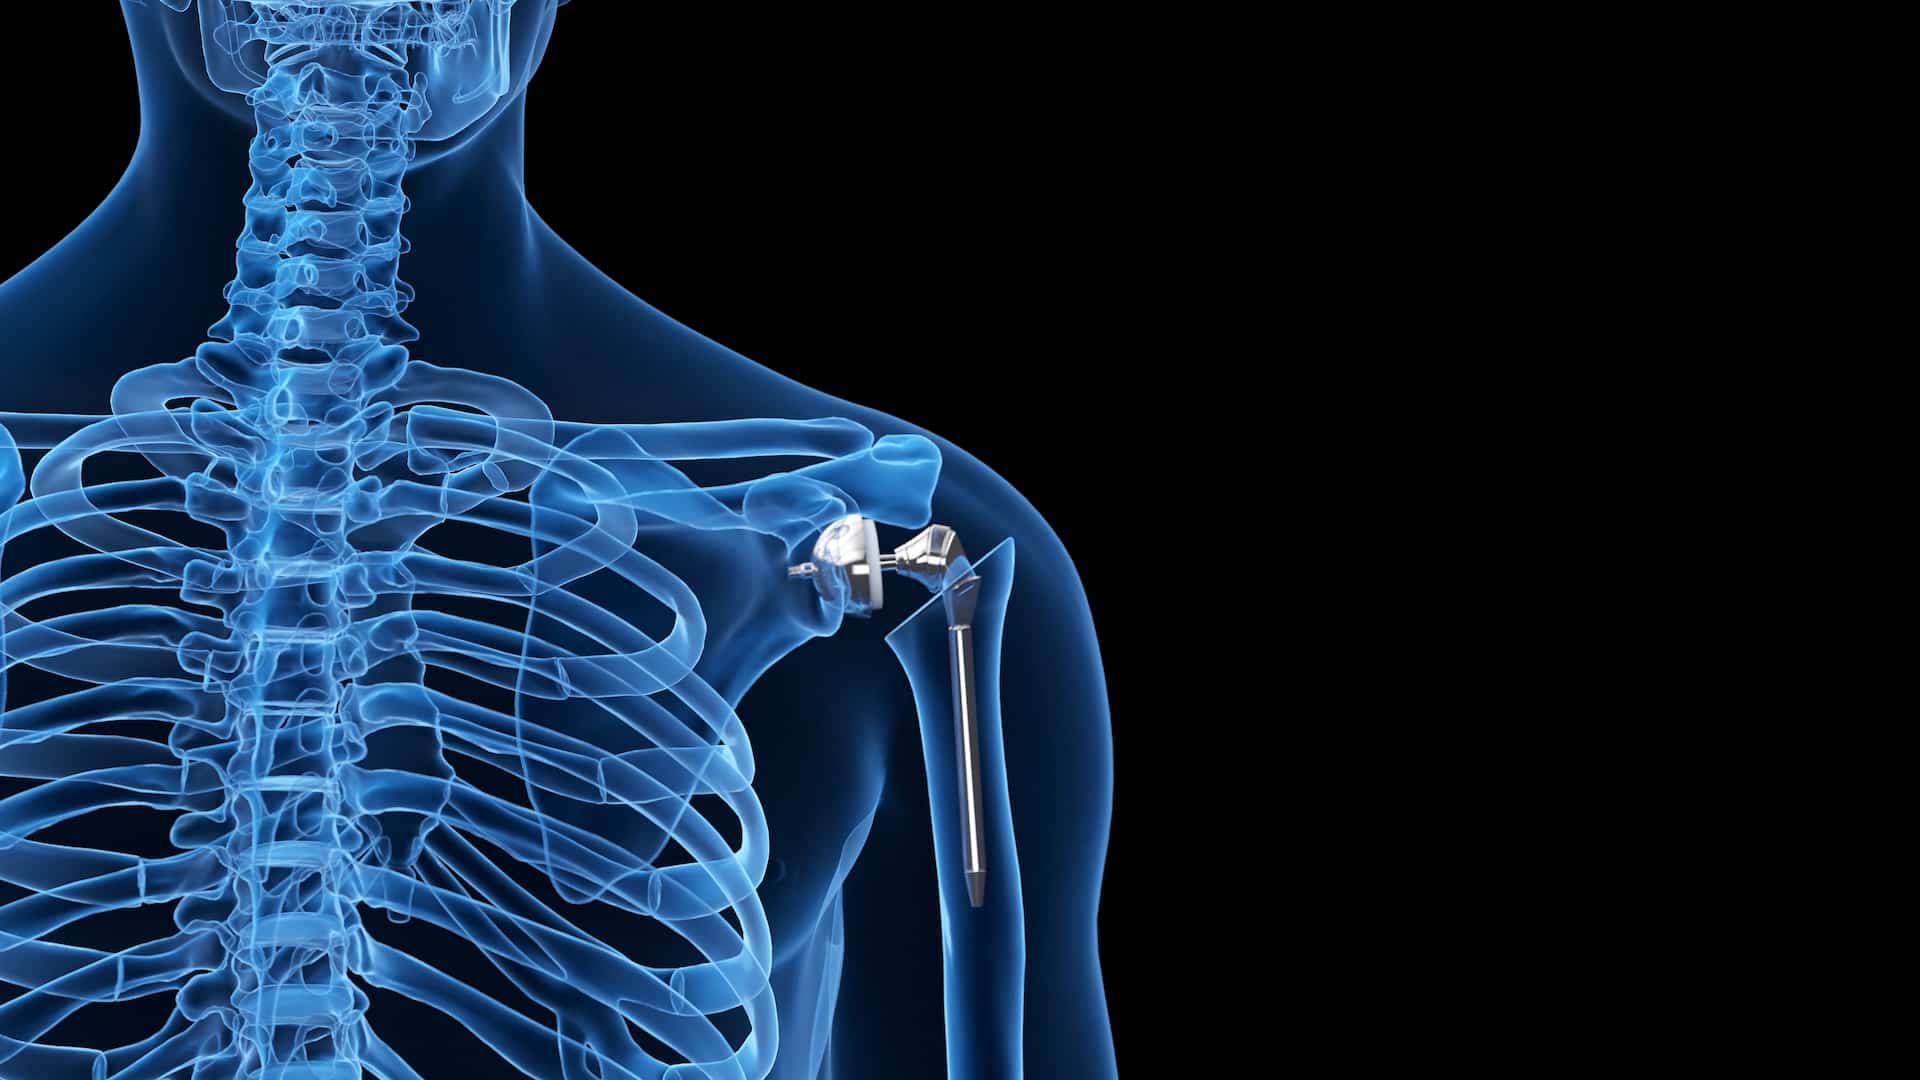 Turkiye shoulder replacement surgery